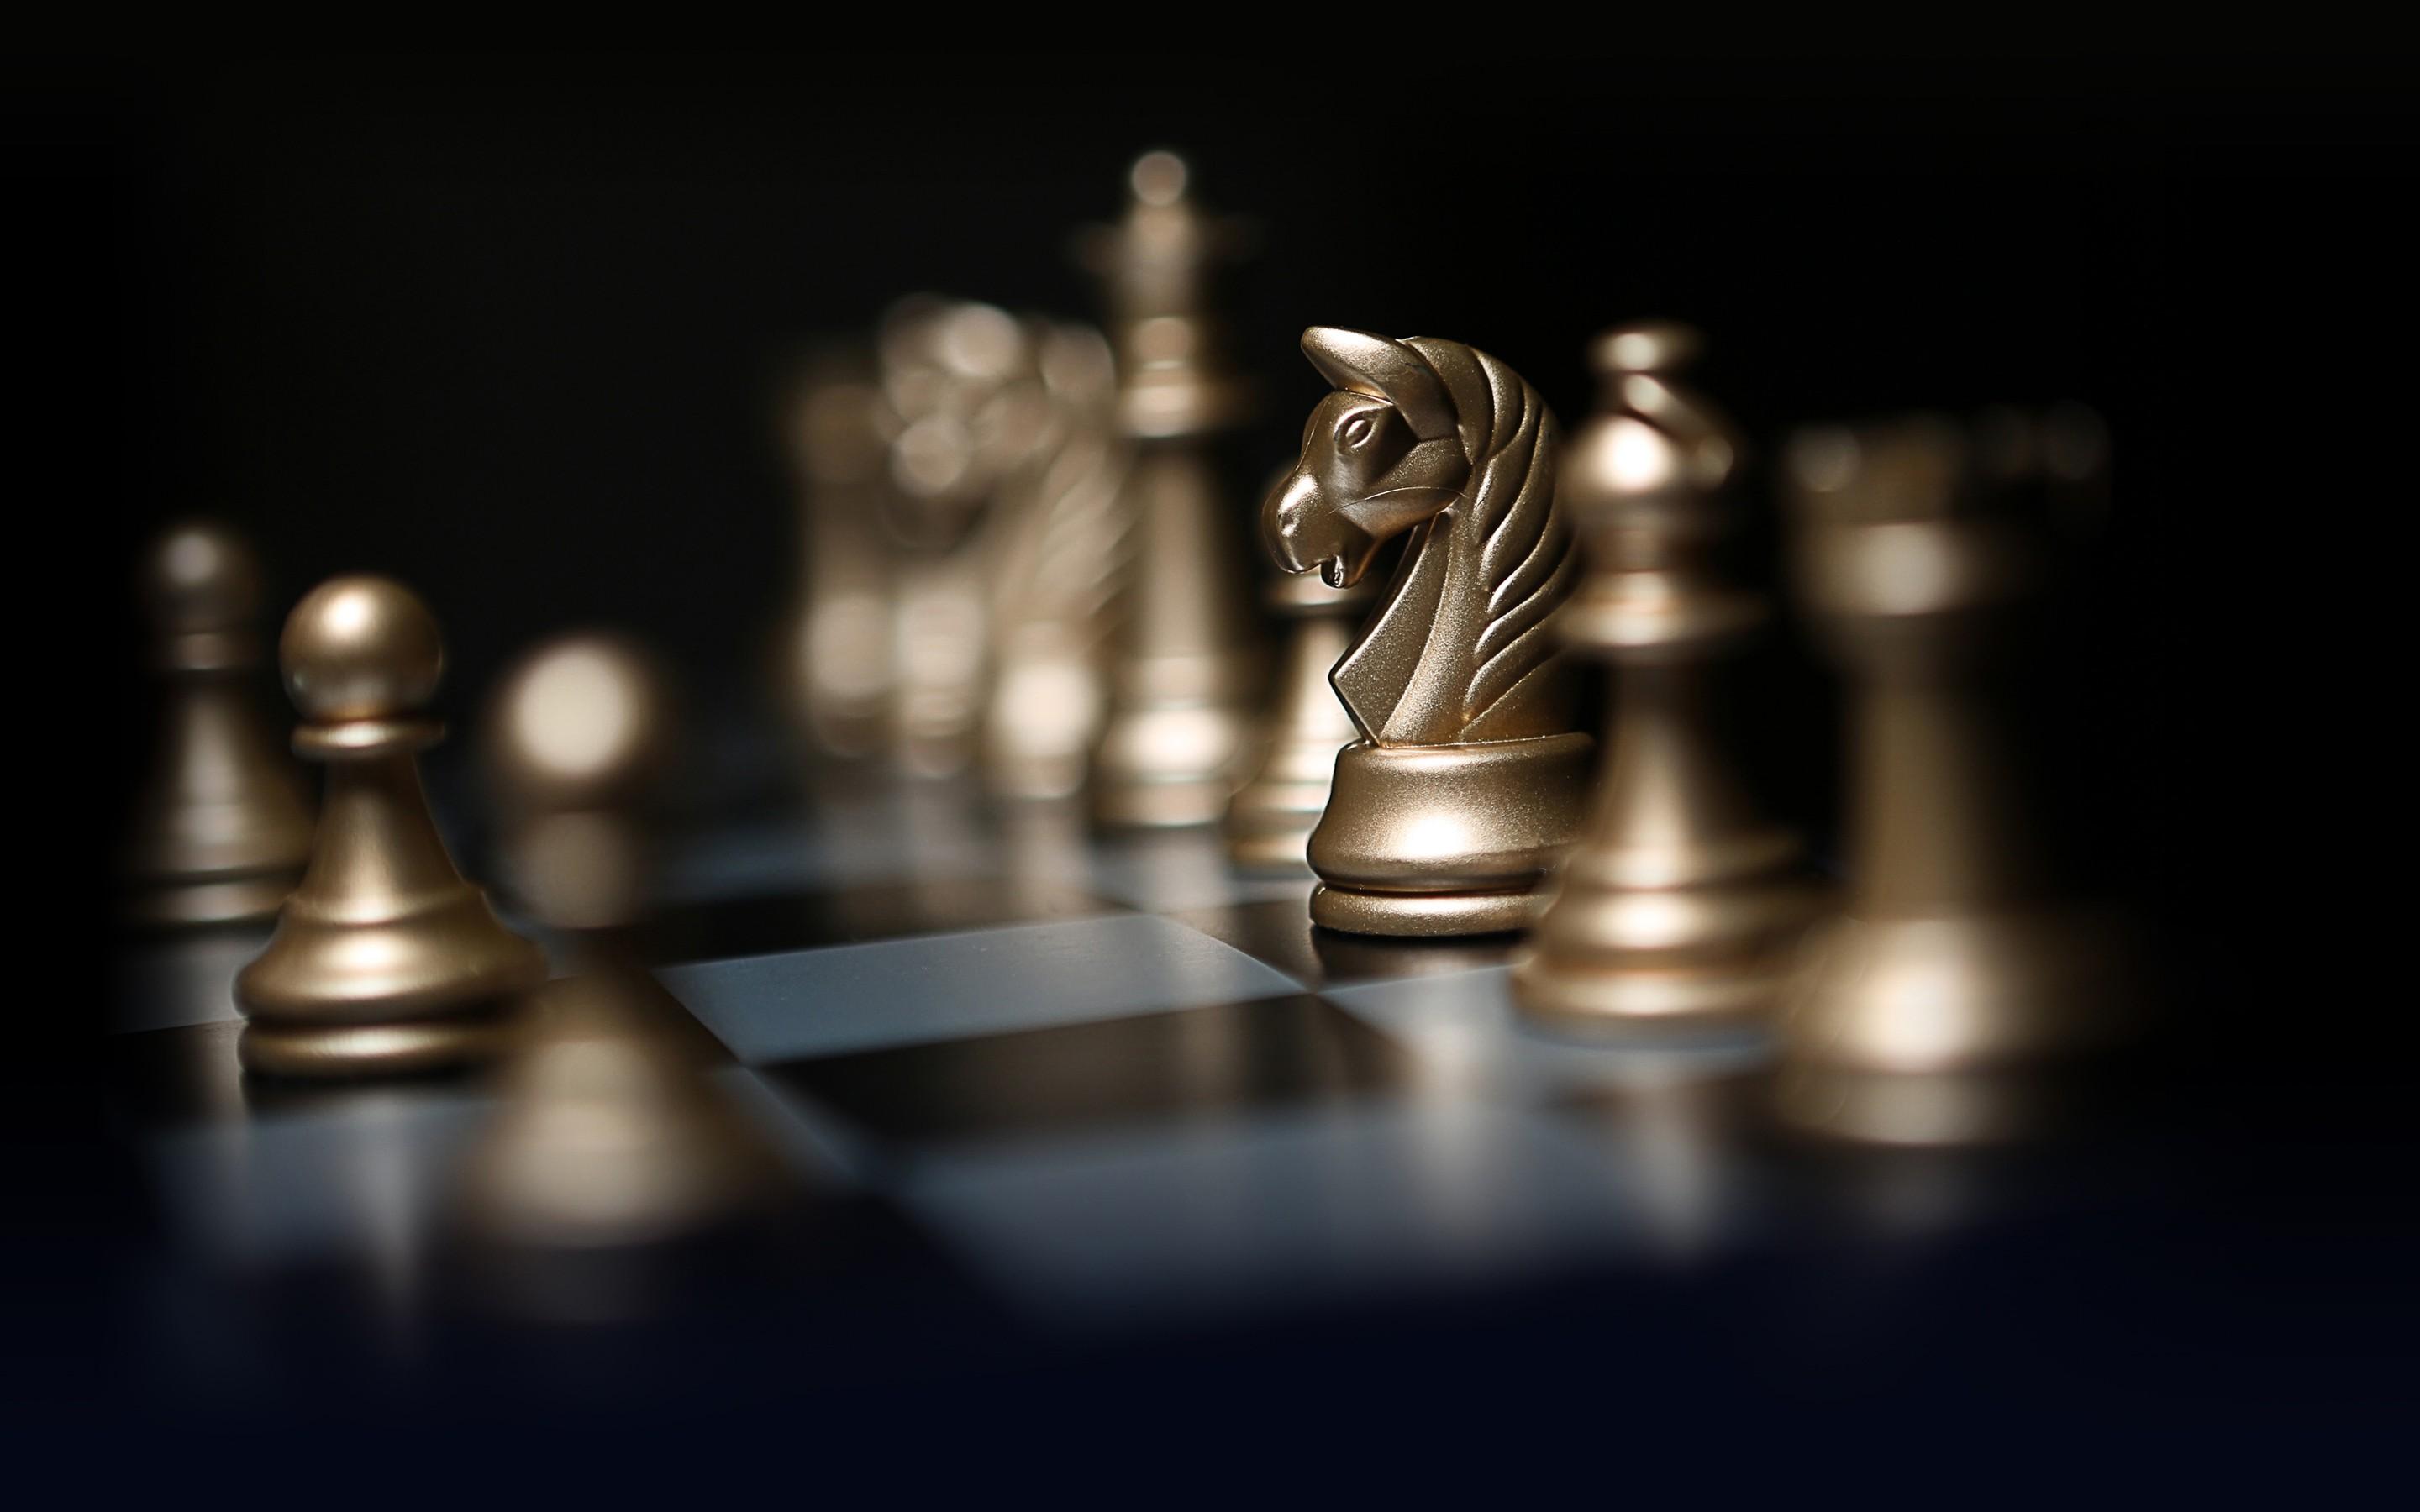 Download wallpaper chess, intellectual games, figure horse